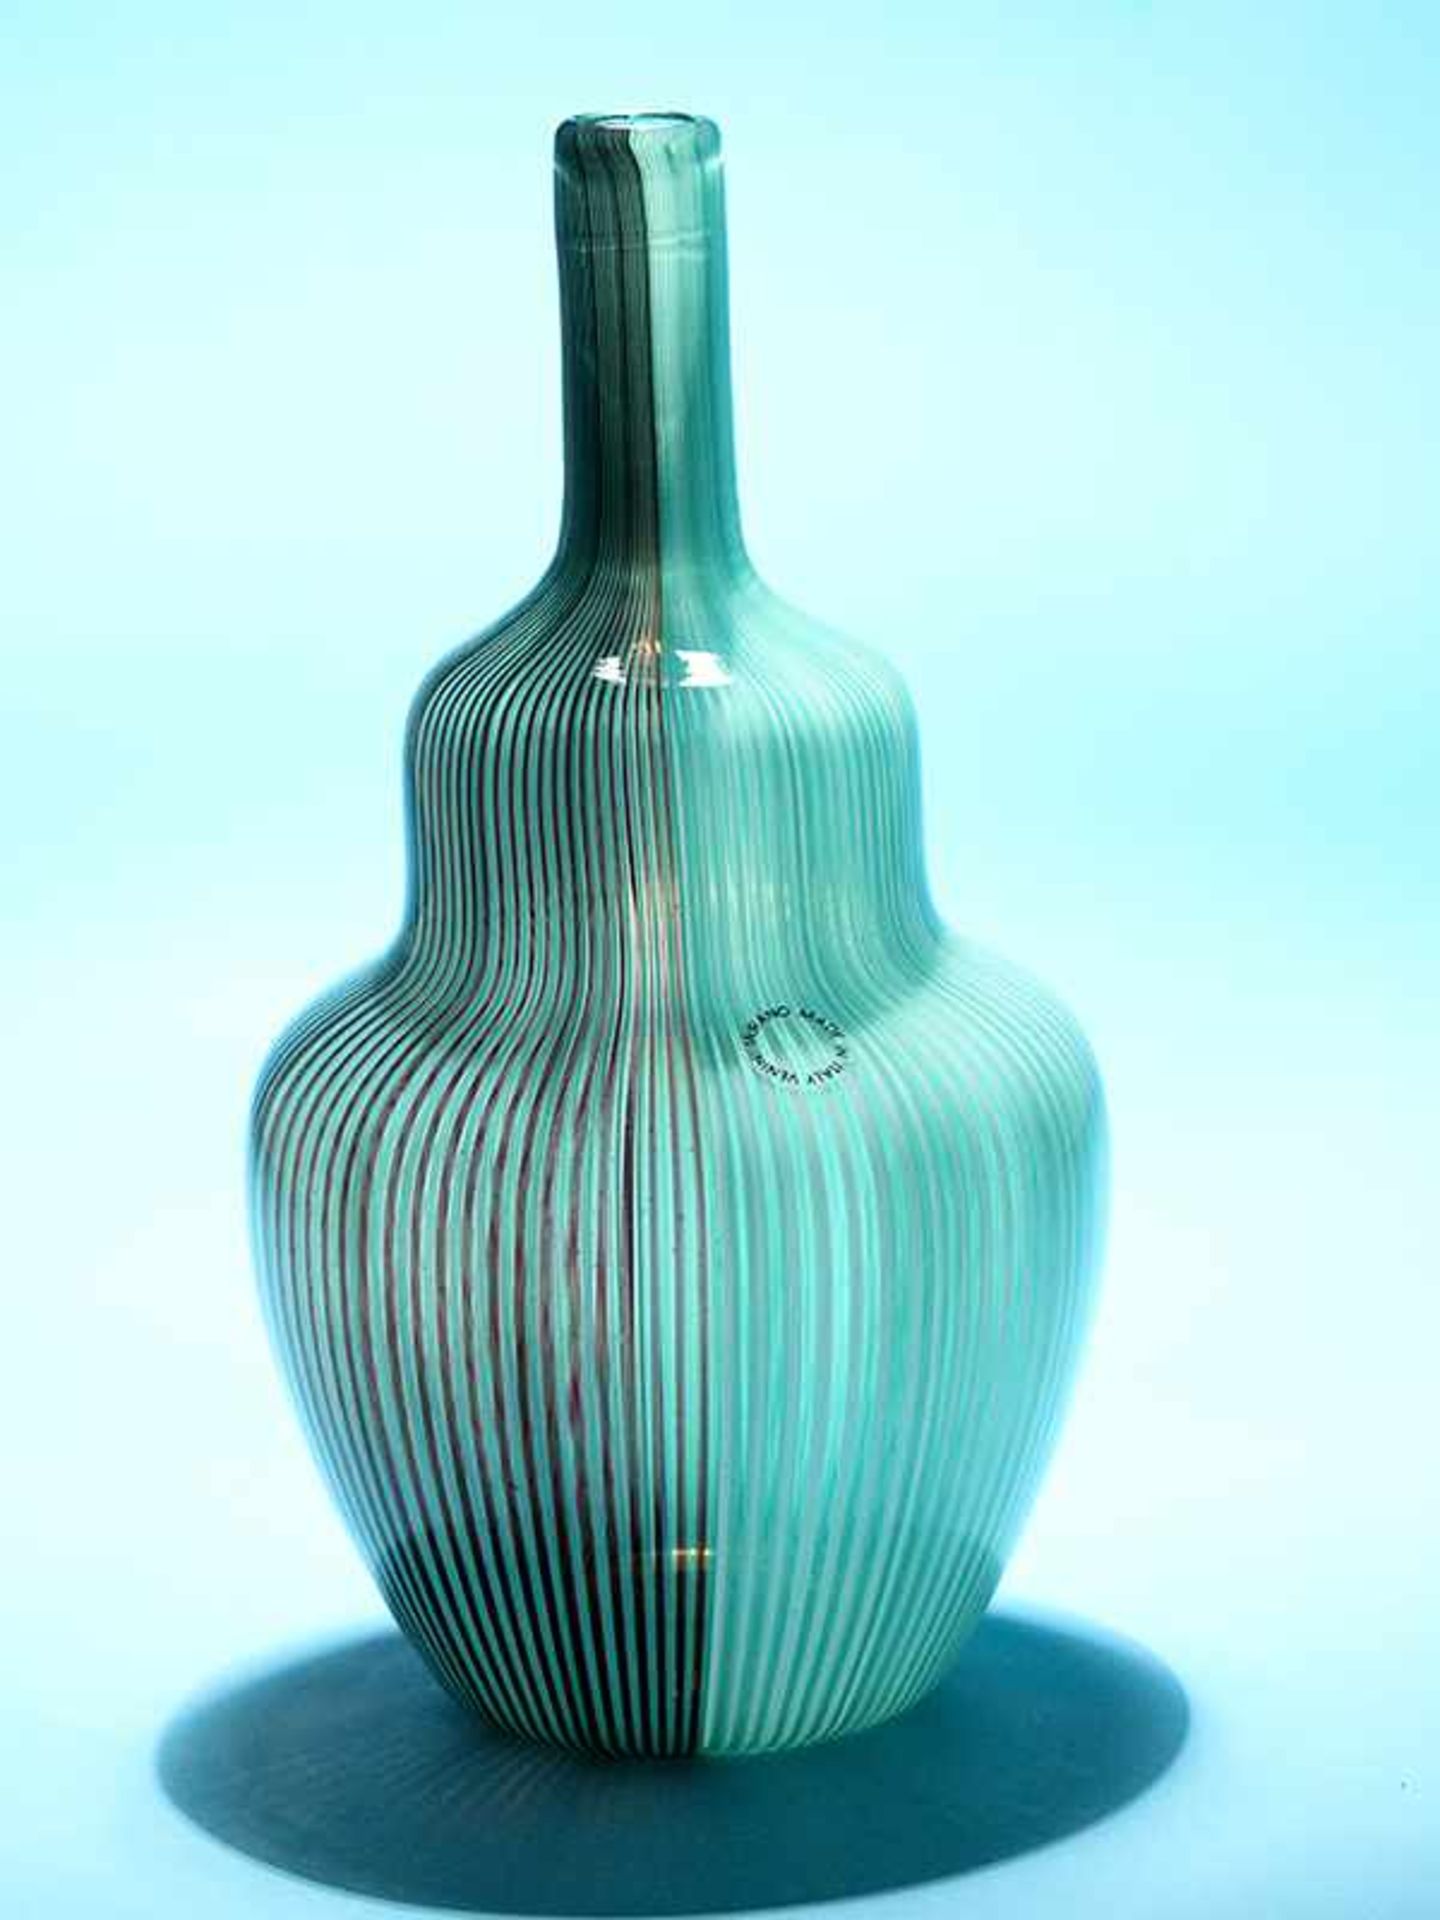 Vase "Tessuto", Entwurf Carlo Scarpa um 1940, Venini/Murano, Italien, 1989. Muranoglas in "Canna"